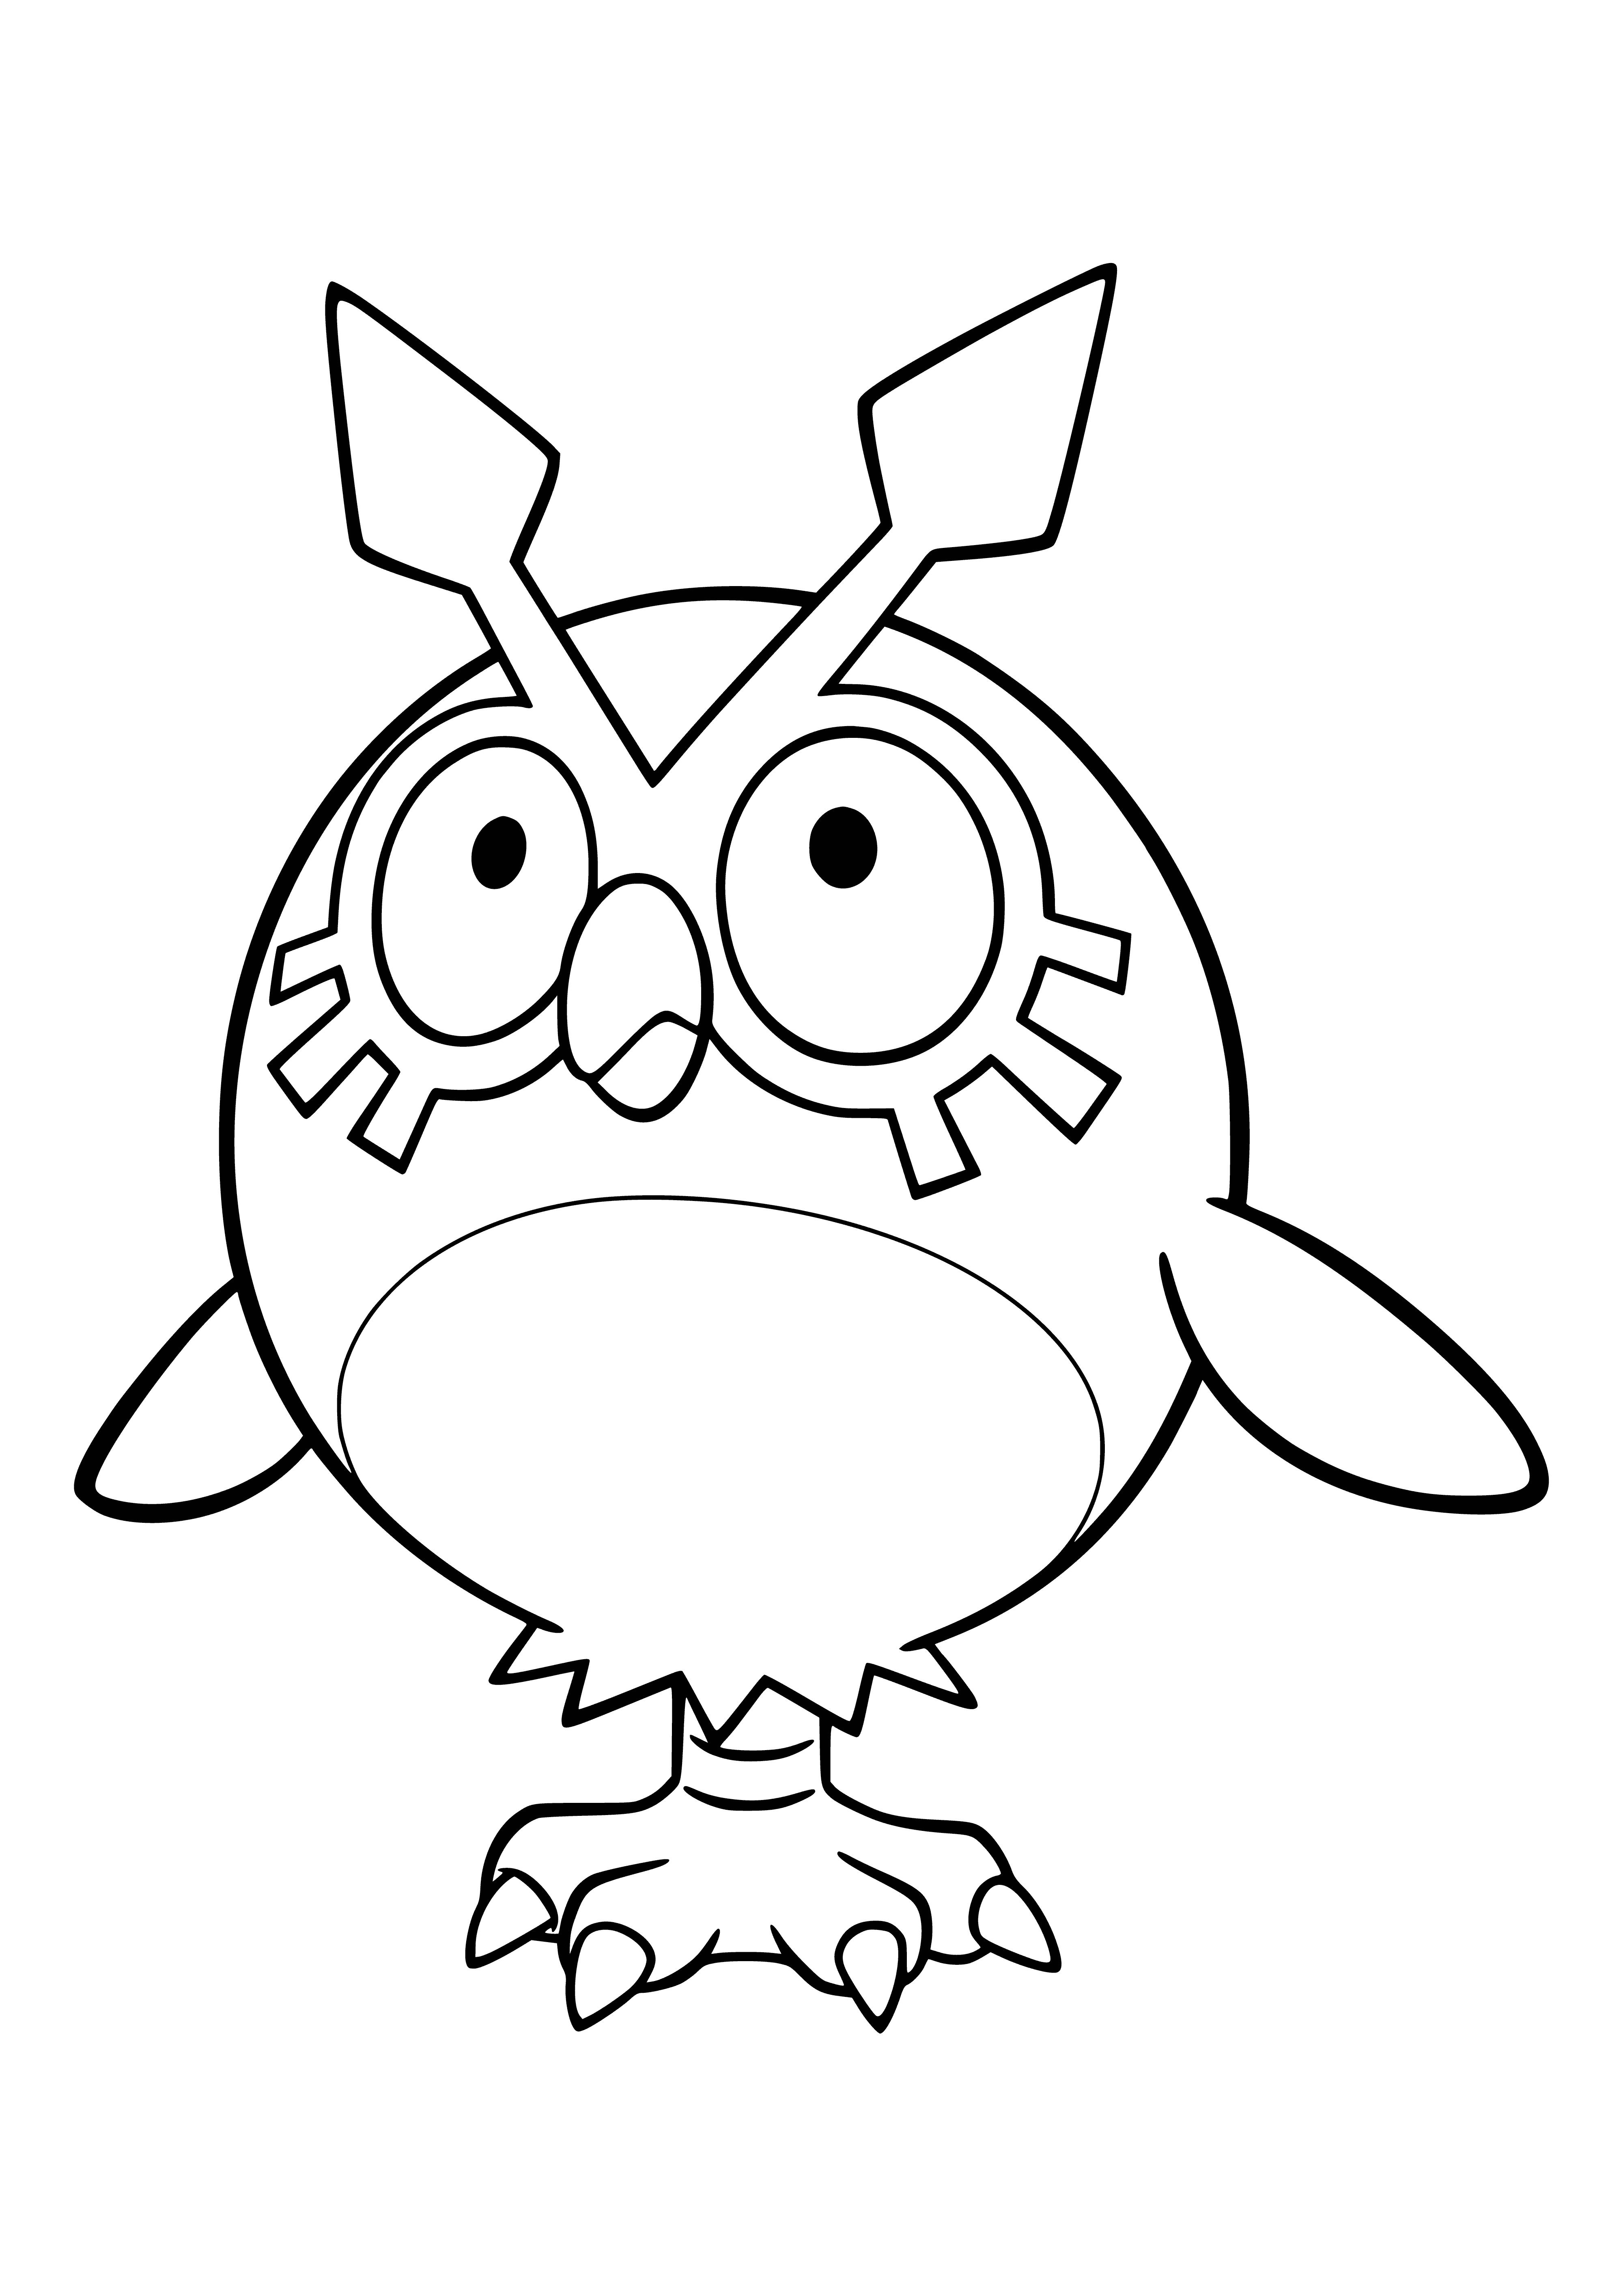 coloring page: Owl-like Pokémon w/ blue/brown feathers, small body, big head, large yellow eyes, 2 long black feathers, black beak & feet.